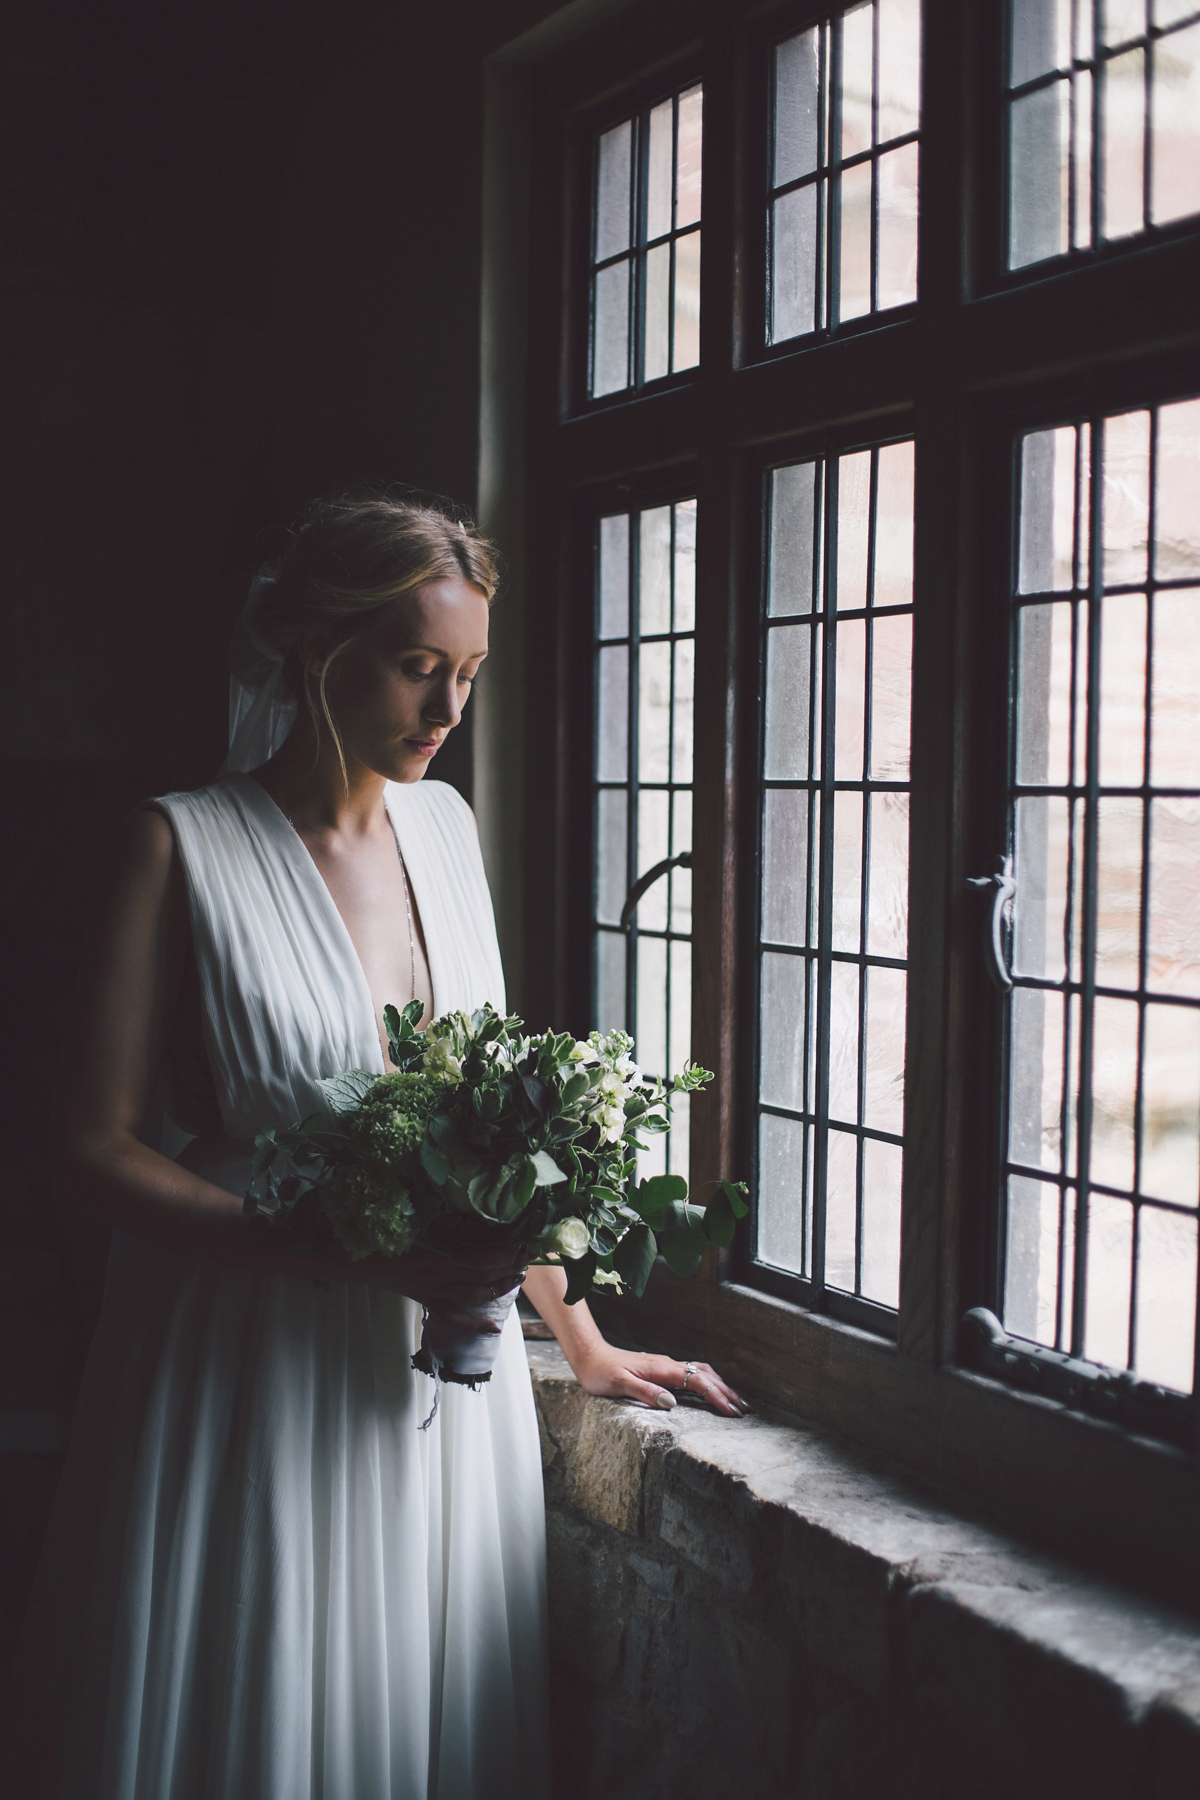 Barefoot bride Zoё wore a dress she had designed herself for her effortlessly elegant wedding at Blackfriar medieval priory in Gloucester. Captured by Grace Elizabeth Photography.